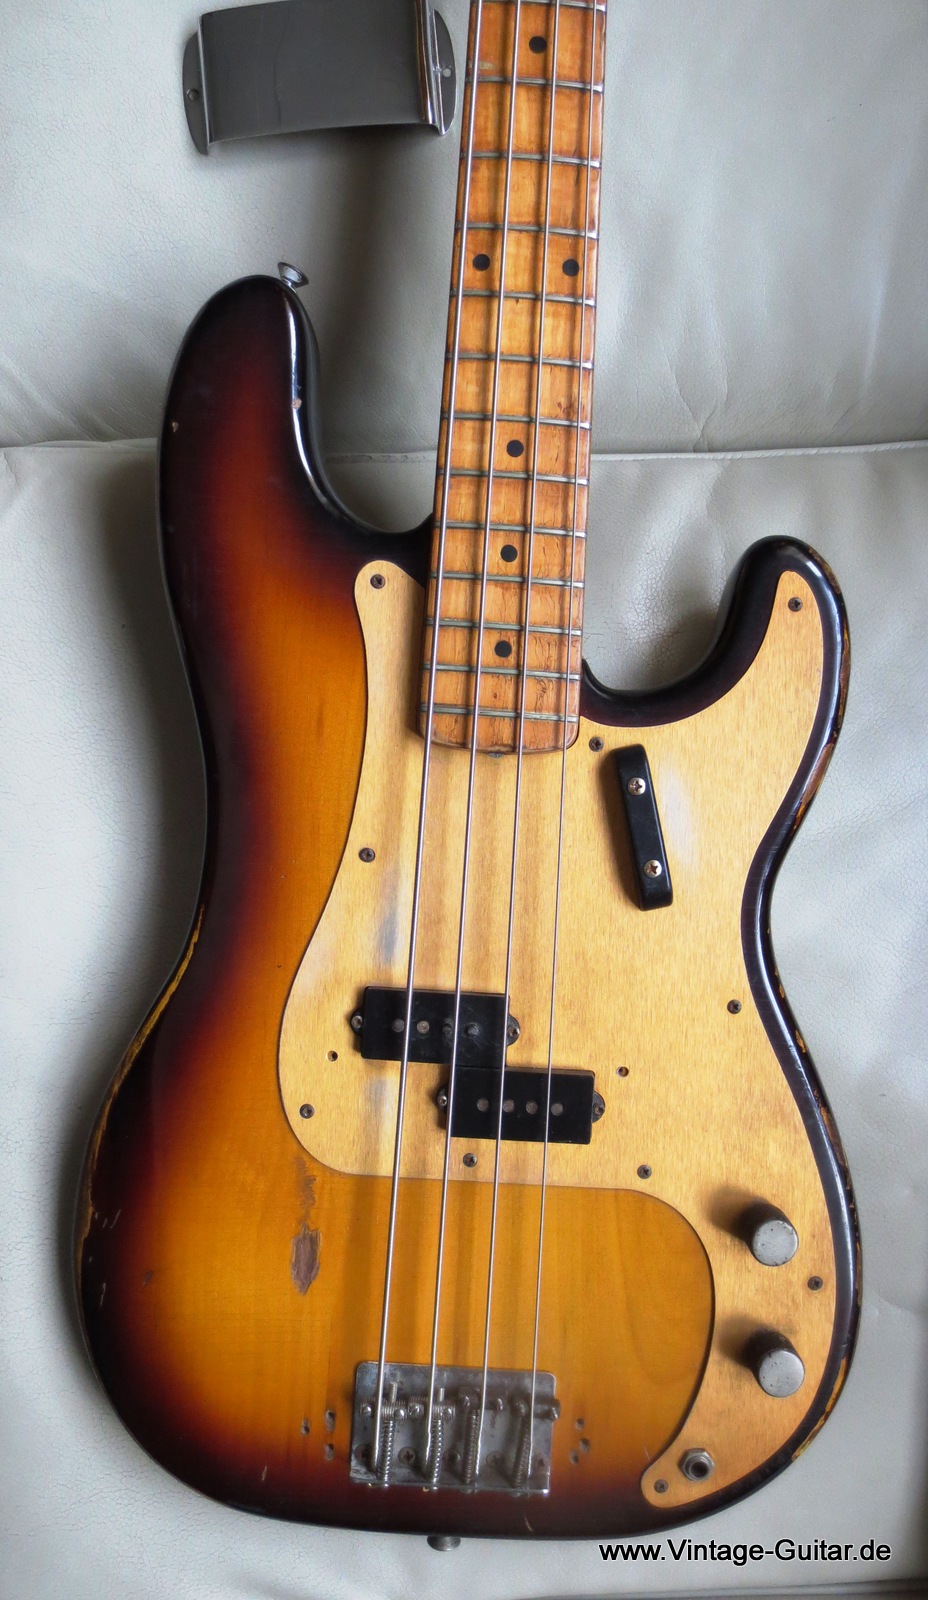 Fender_Precision_Bass_1958-anodized-pickguard-002.JPG